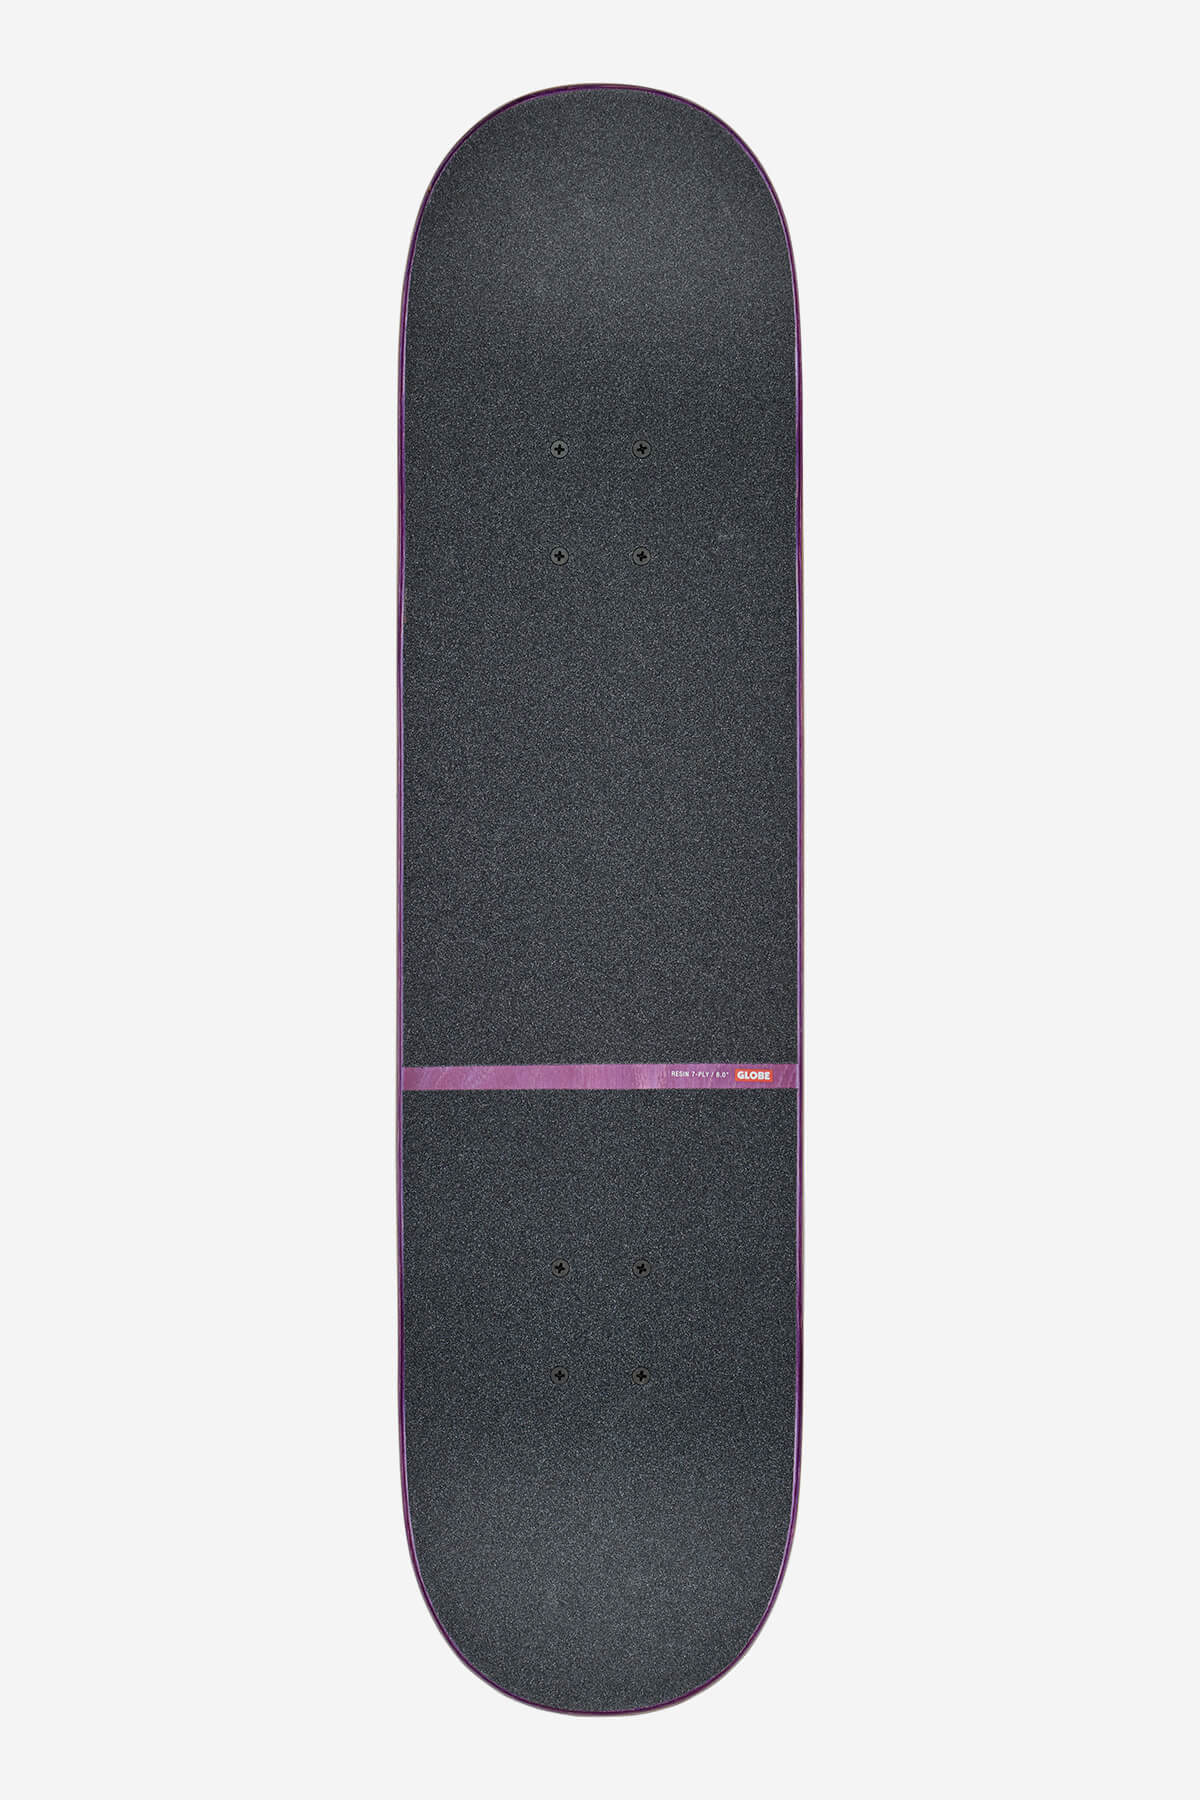 Globe - G1 Orbit - Super Natural - 8.0" Completo Skateboard